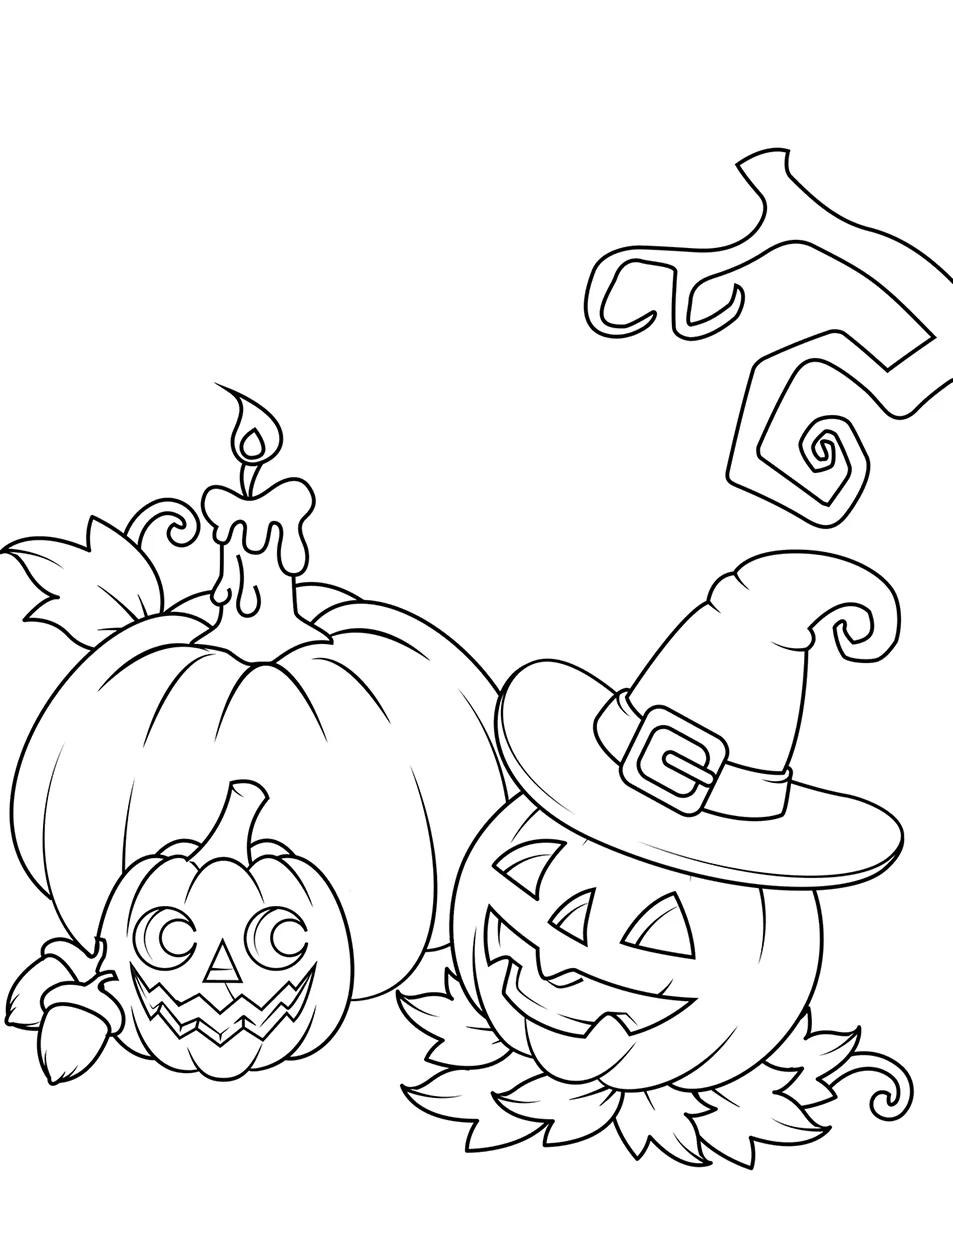 Jack o’ Lantern and Pumpkin